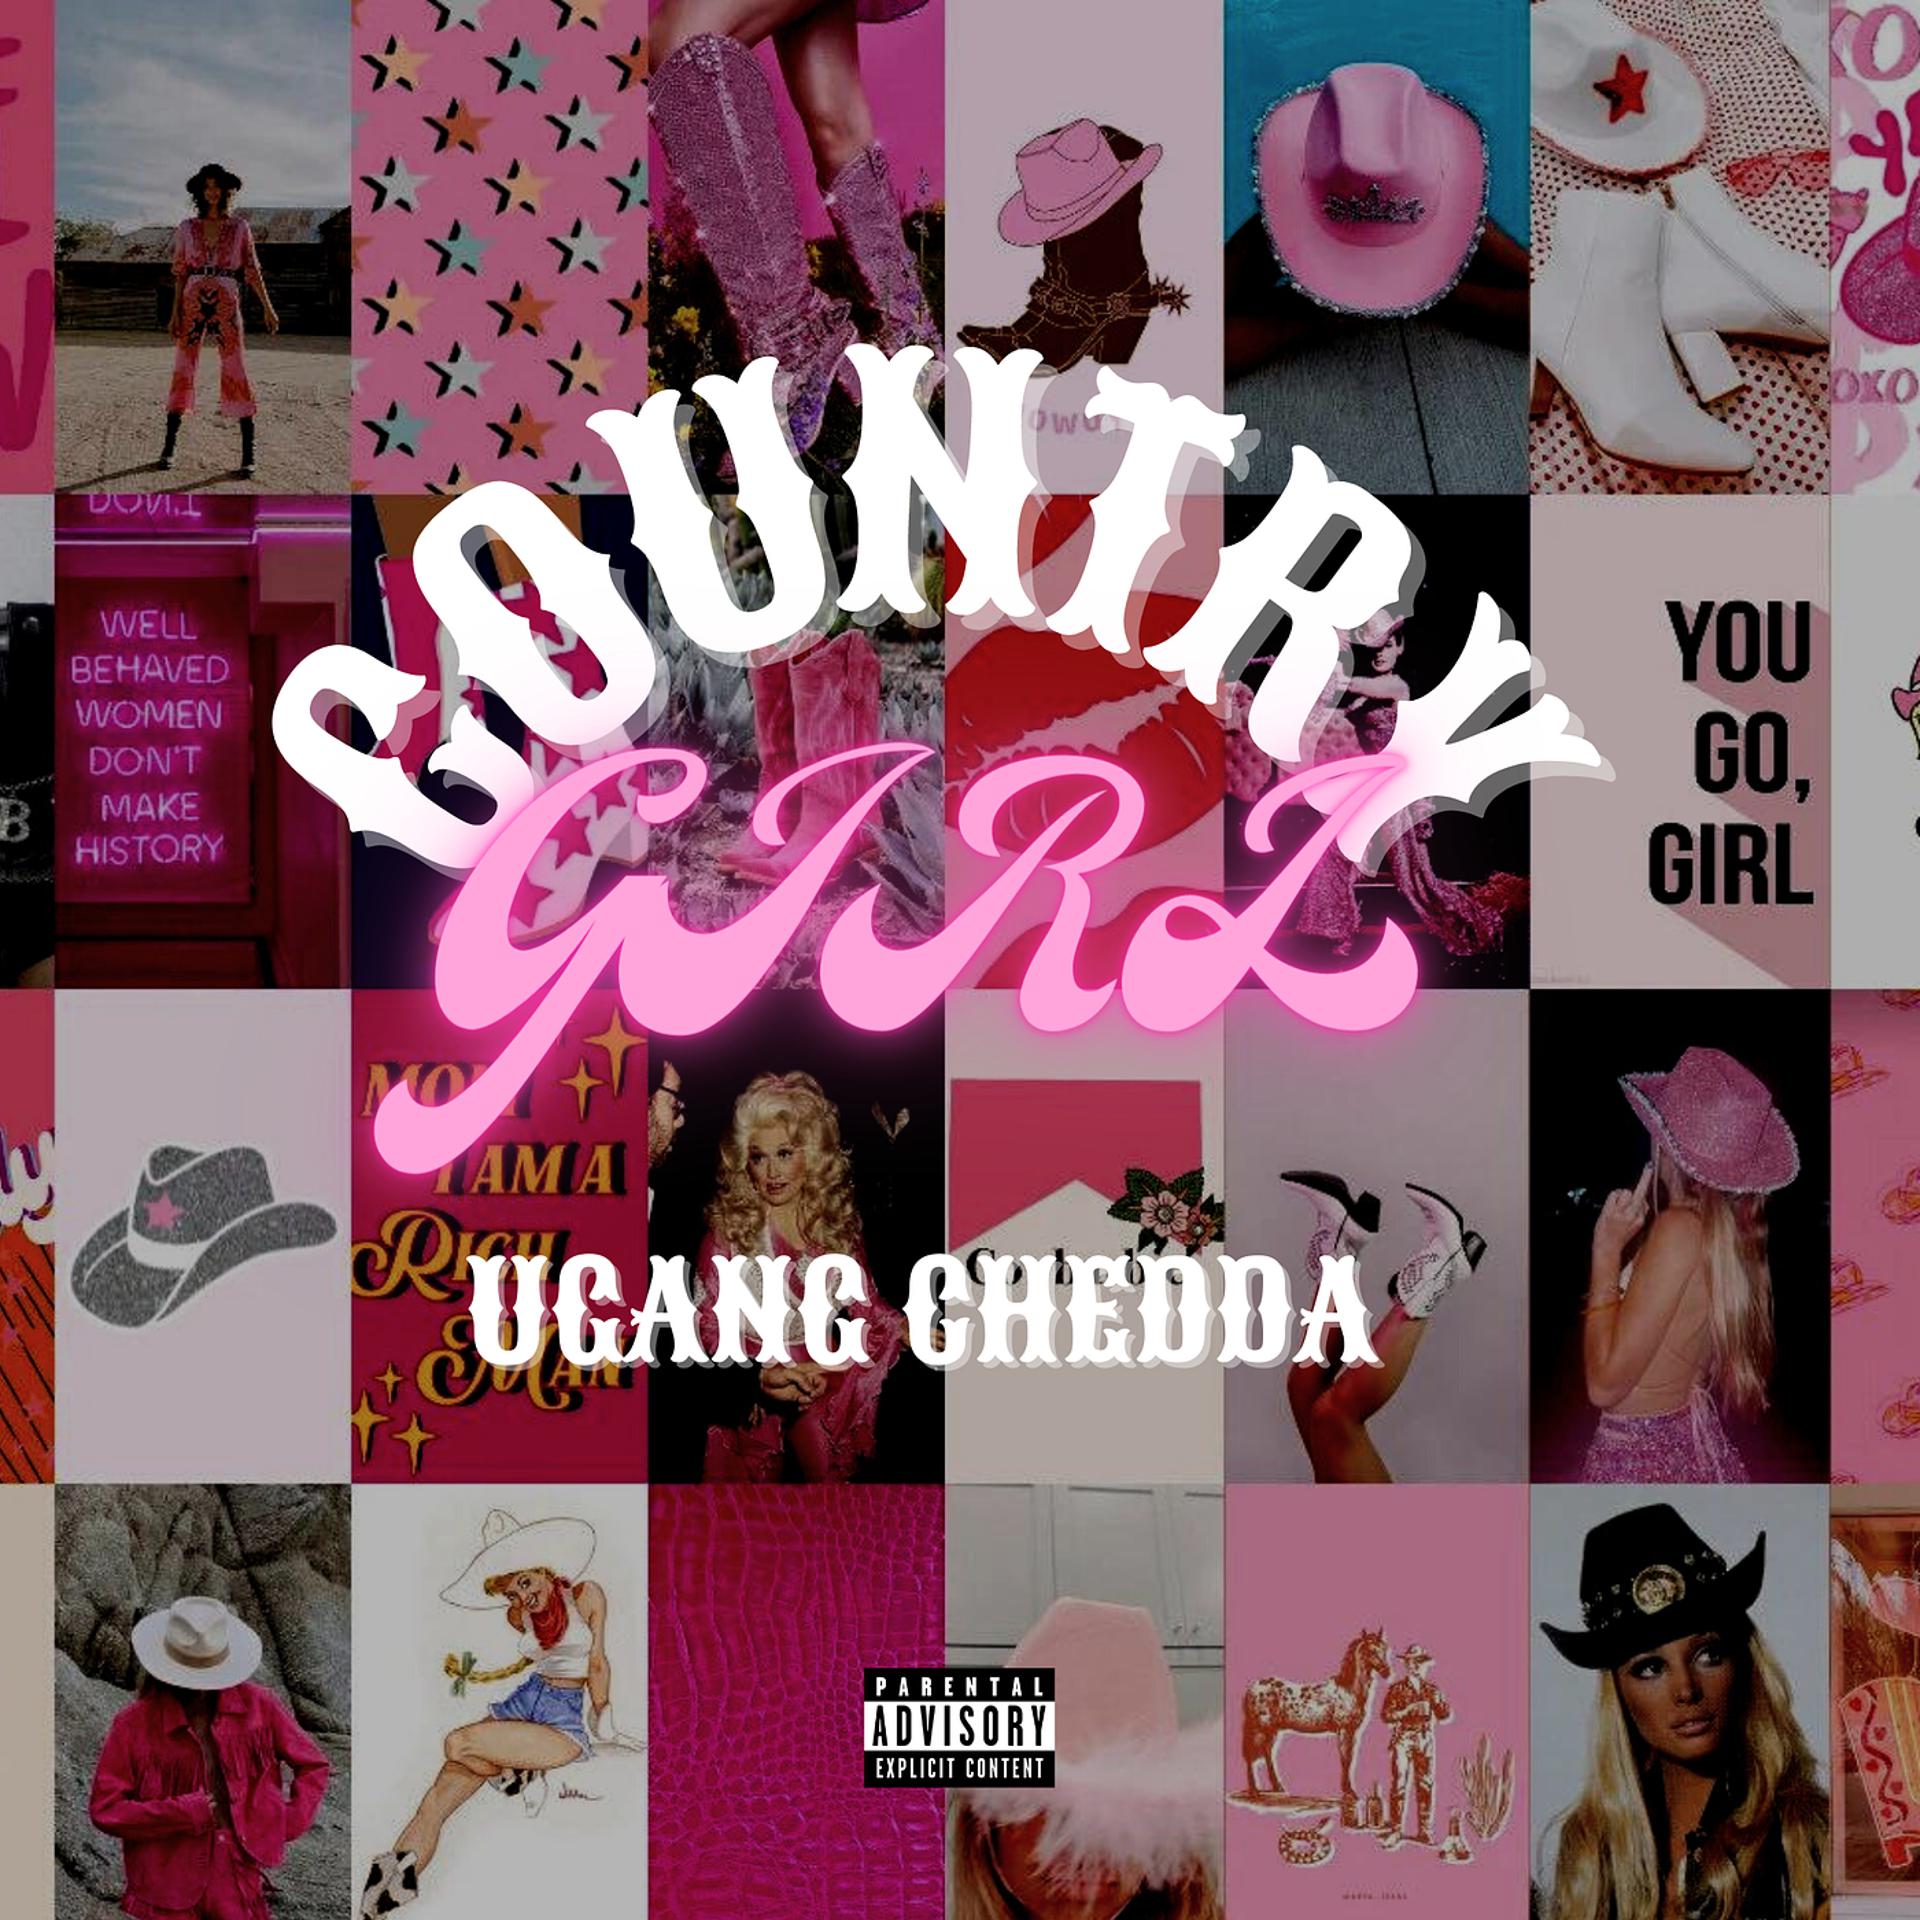 Постер альбома Country Girl